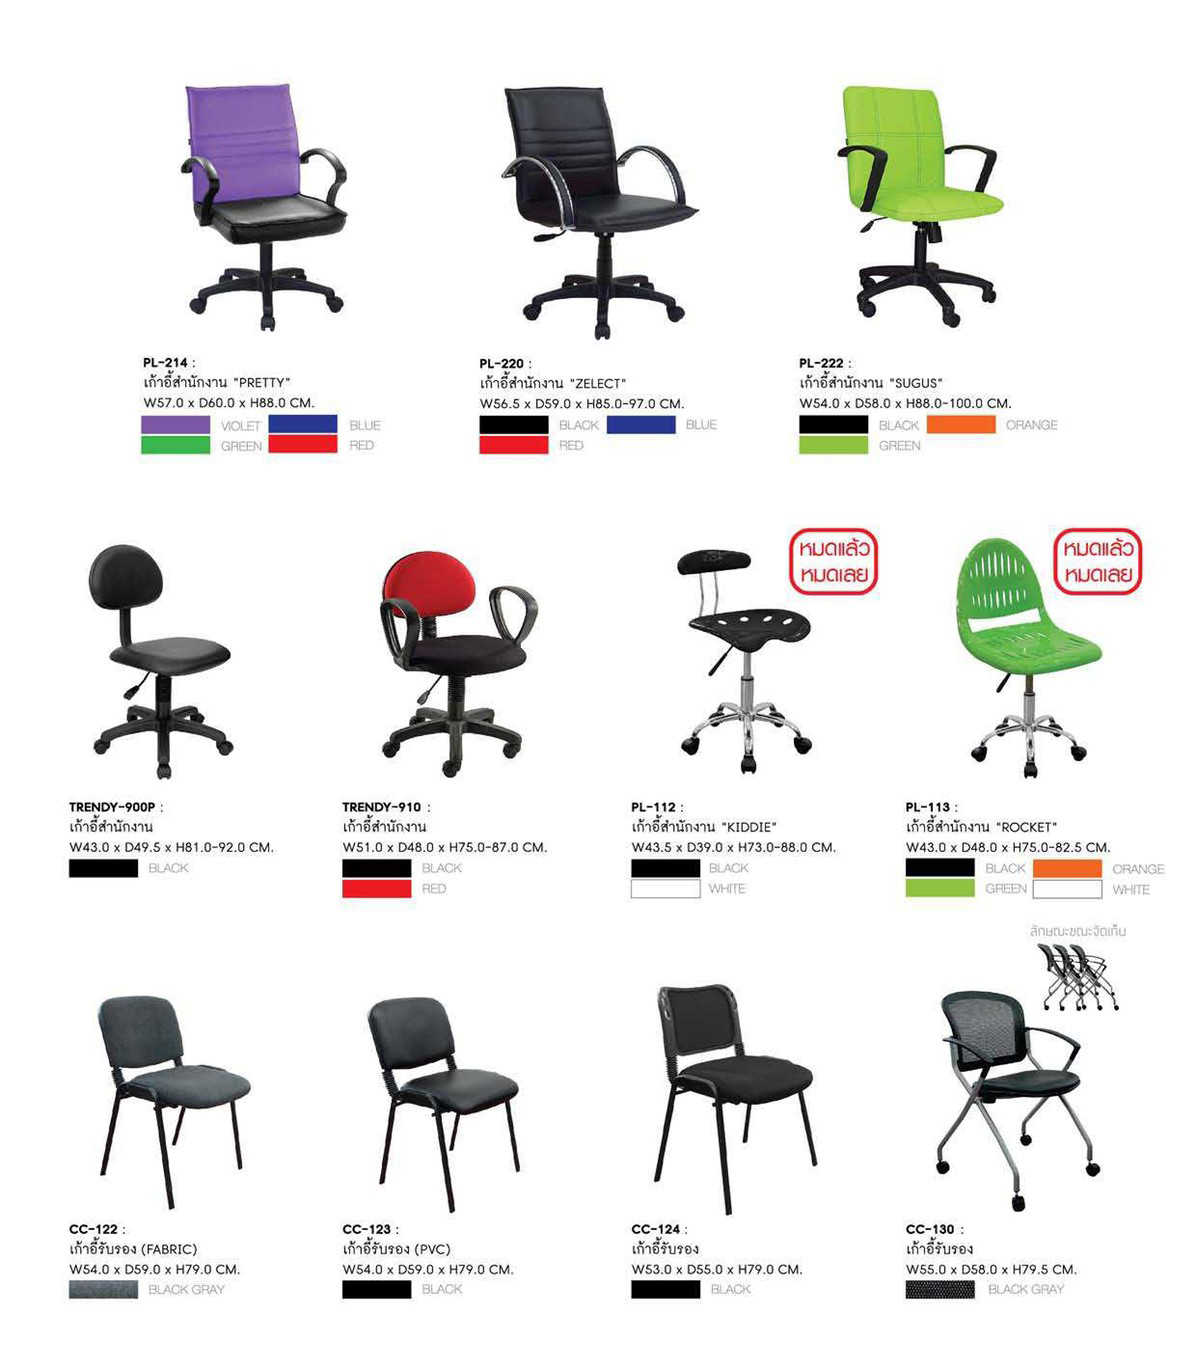 64072::TRENDY-900P::เก้าอี้สำนักงาน TRENDY-900P รุ่น เทรนดี้-900พี สีดำ ขนาด ก430xล495xส810-920 มม. เก้าอี้สำนักงาน ชัวร์